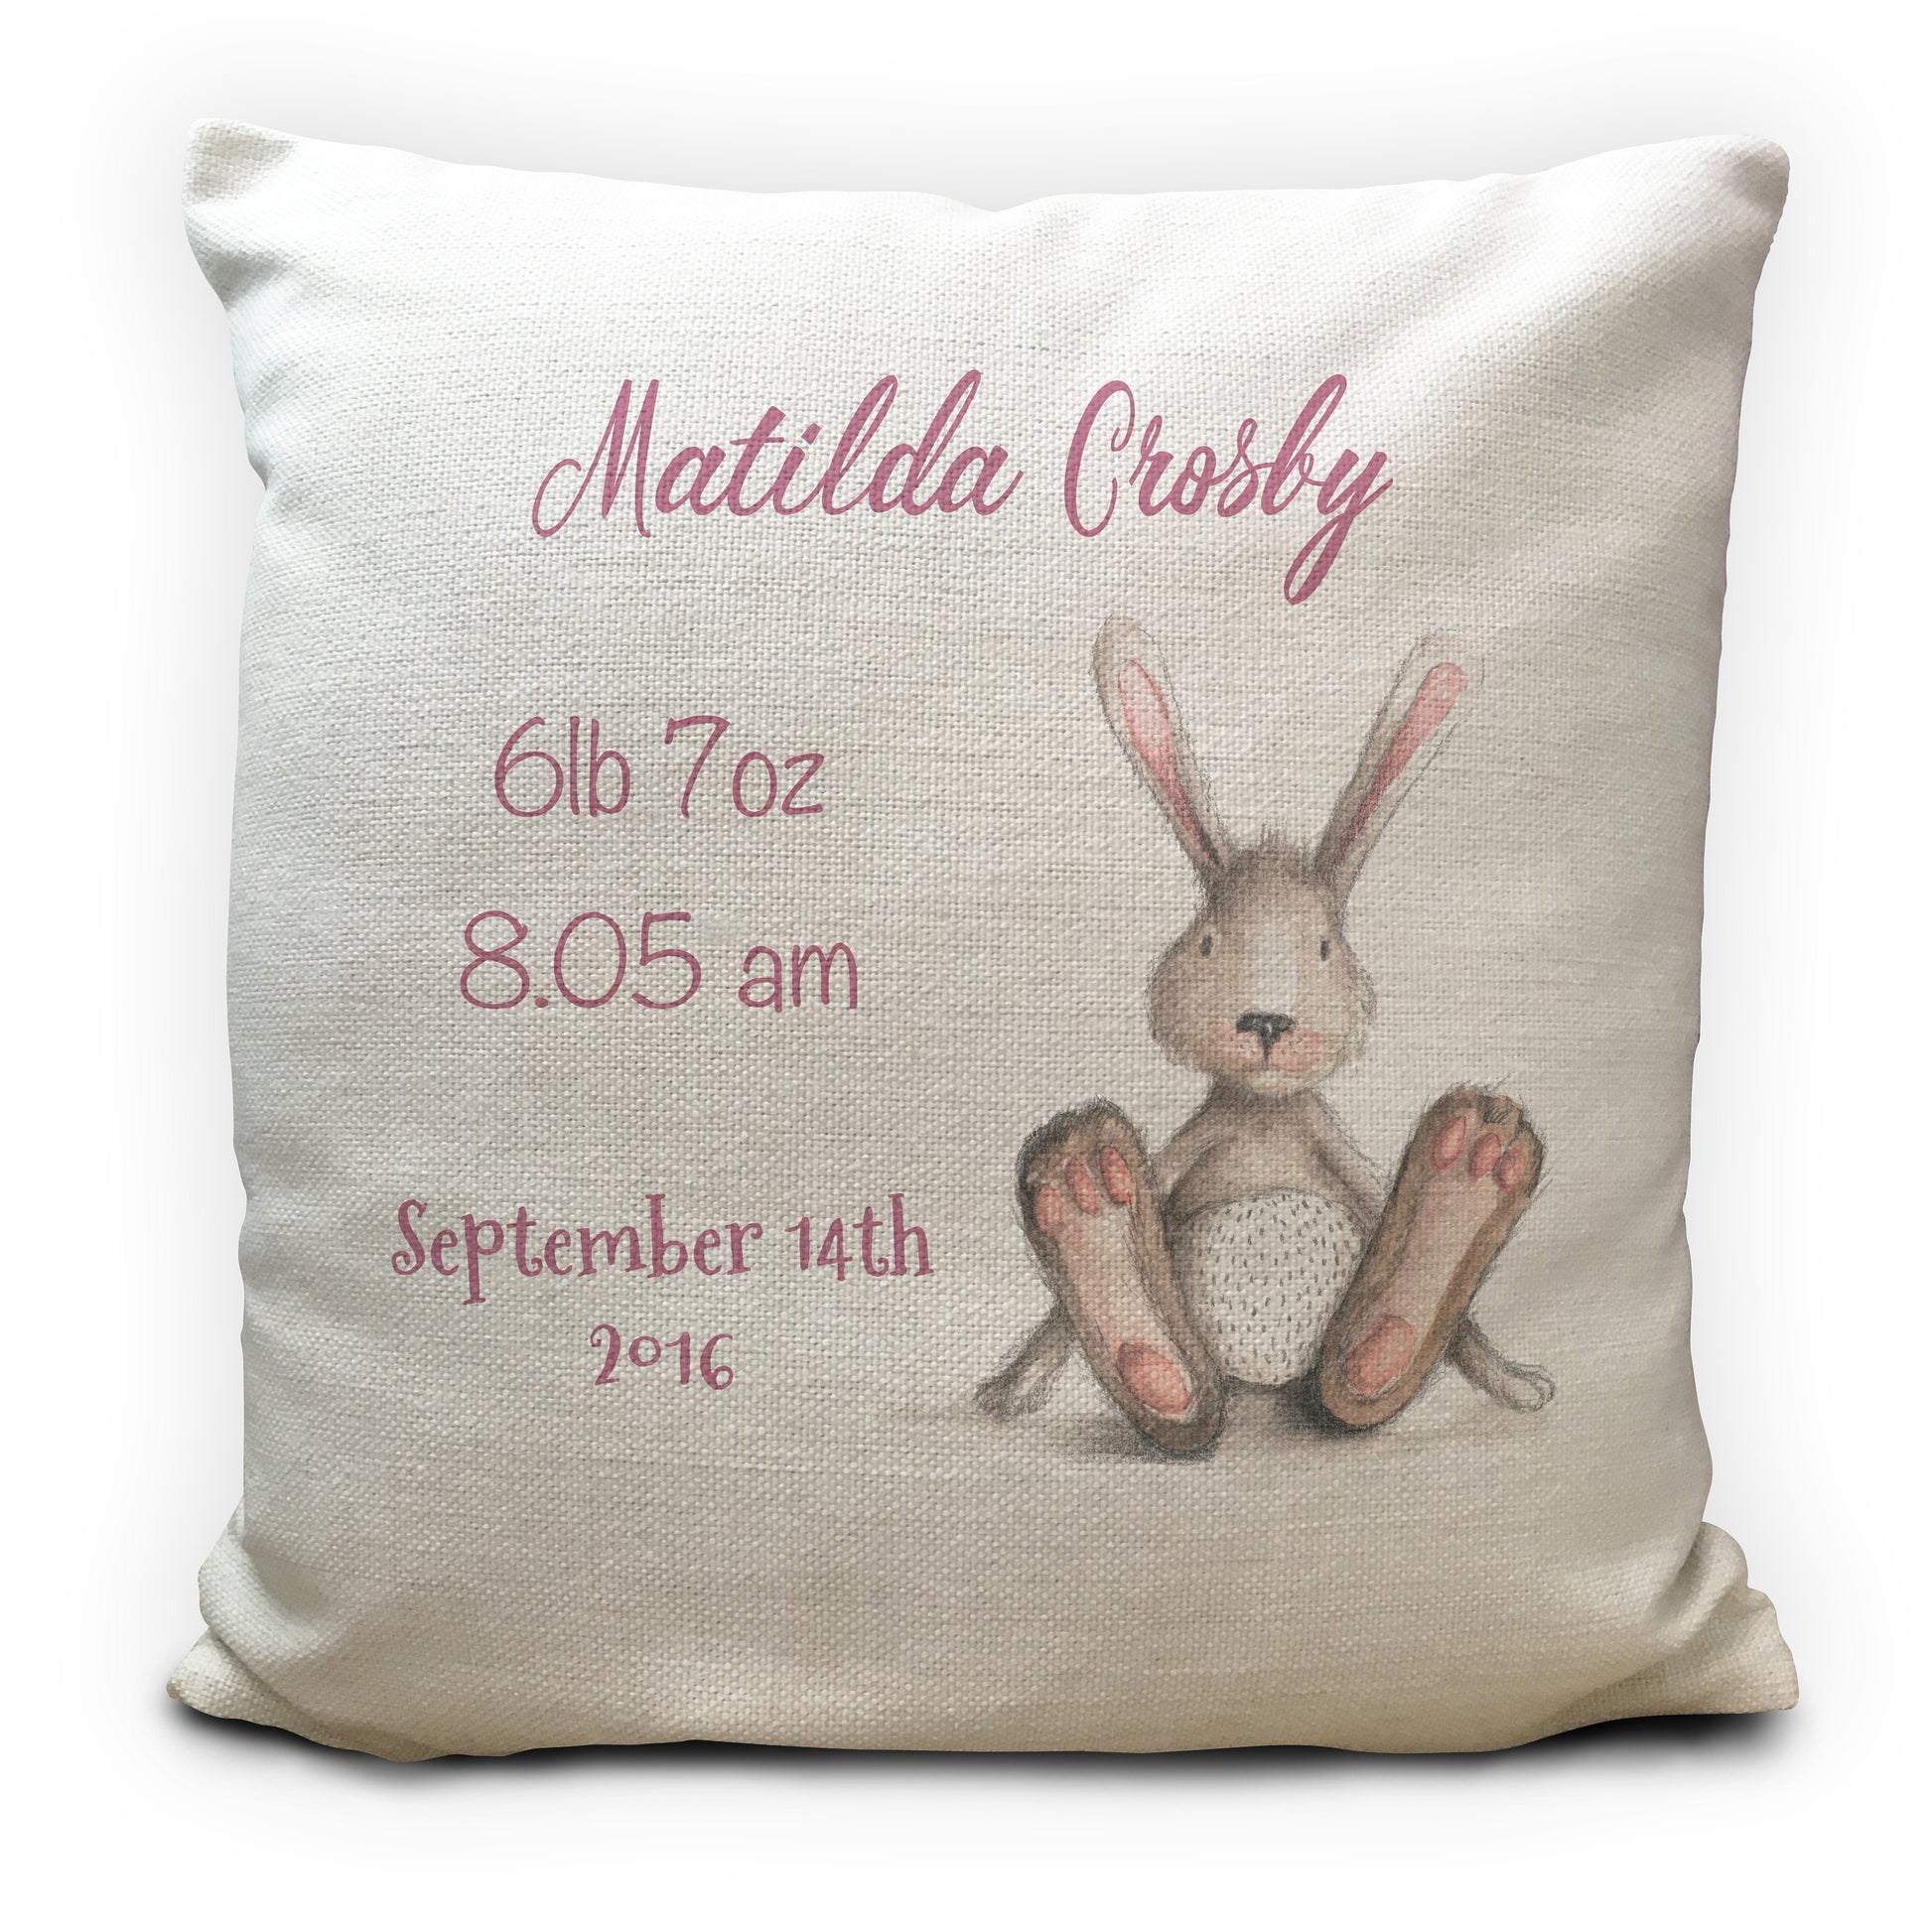 Personalised new baby christening birthday cushion cover gift bunny rabbit design